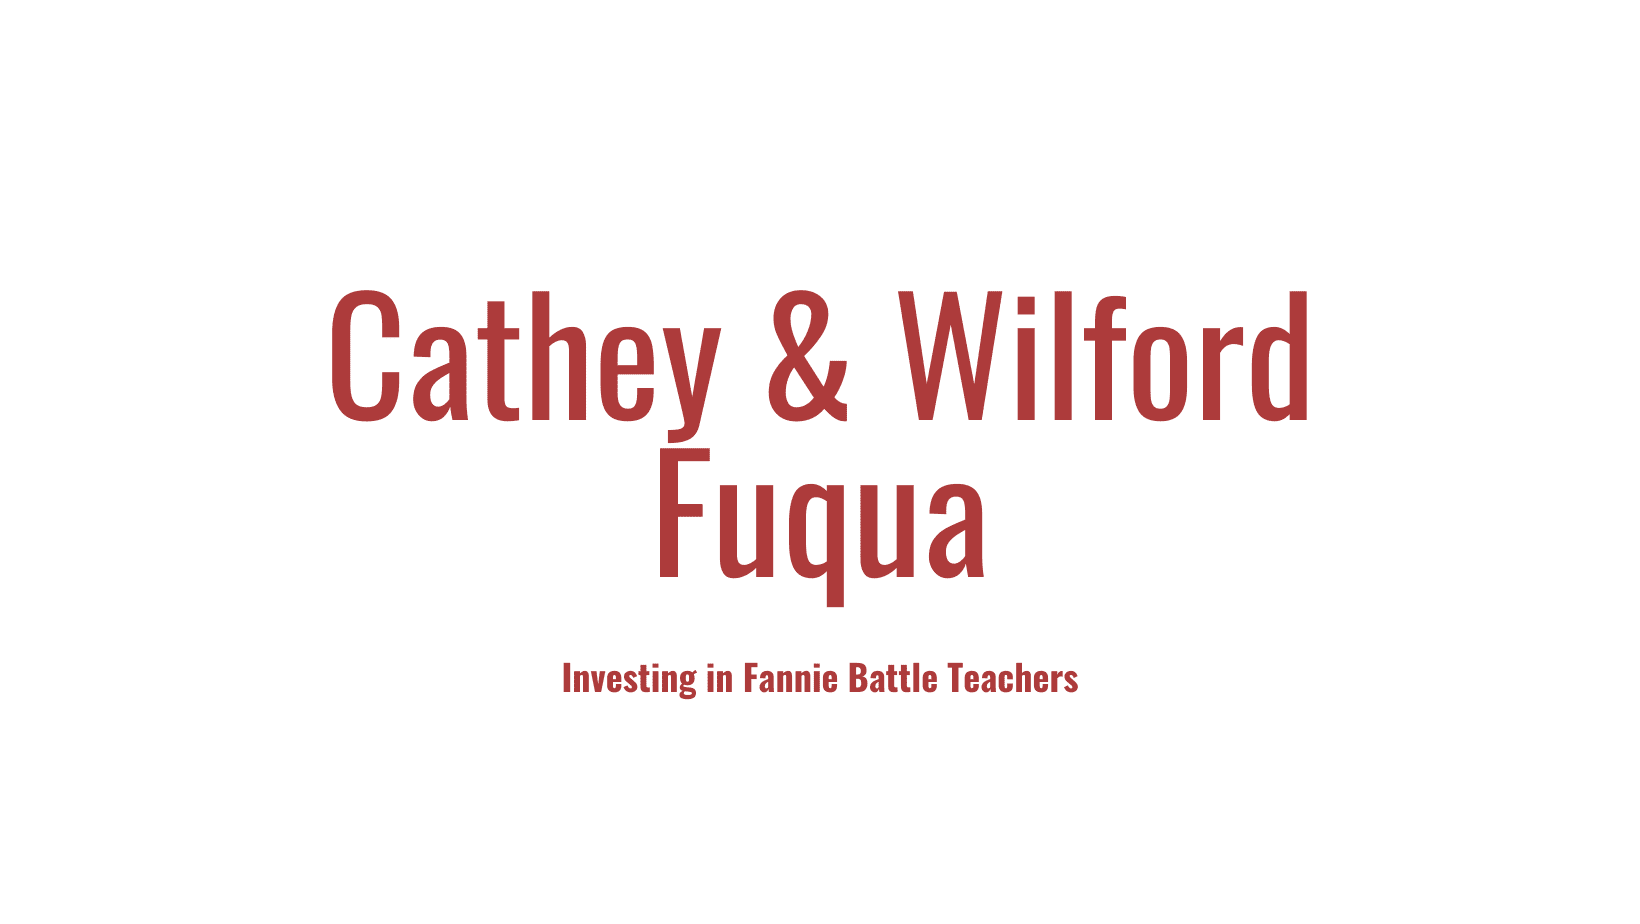 Investing in Fannie Battle Teachers – Cathey & Wilford Fuqua